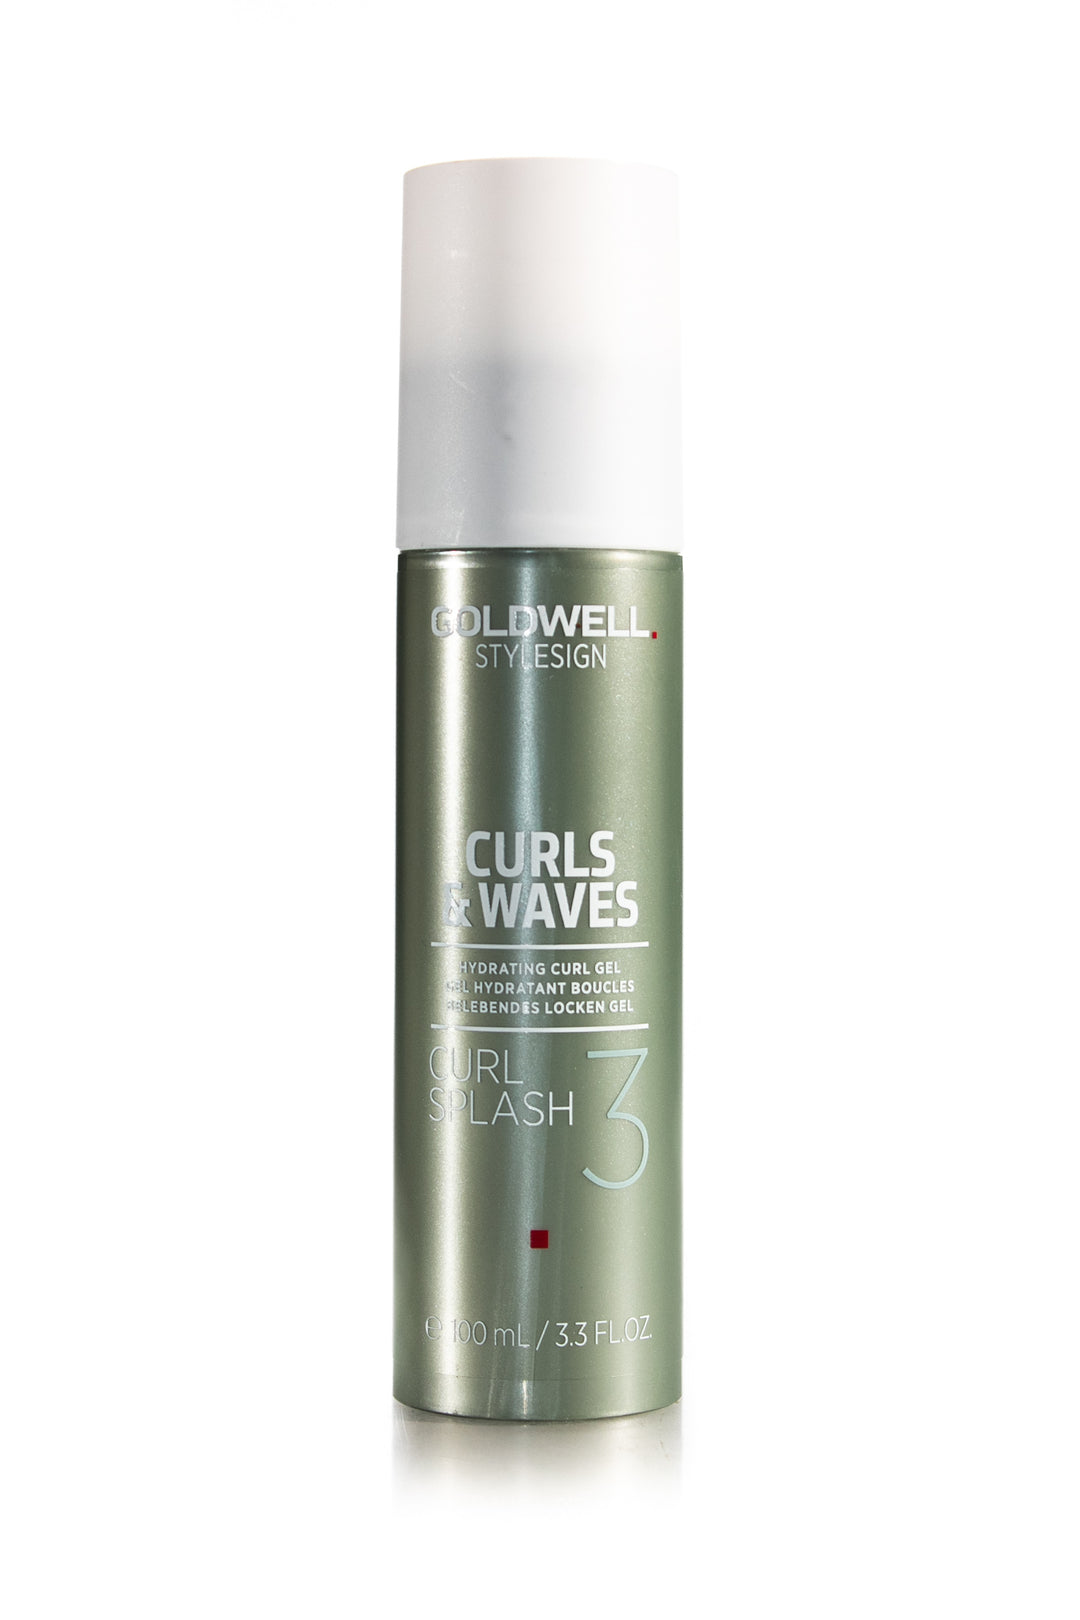 goldwell-stylesign-curls-&-waves-curl-splash-100ml